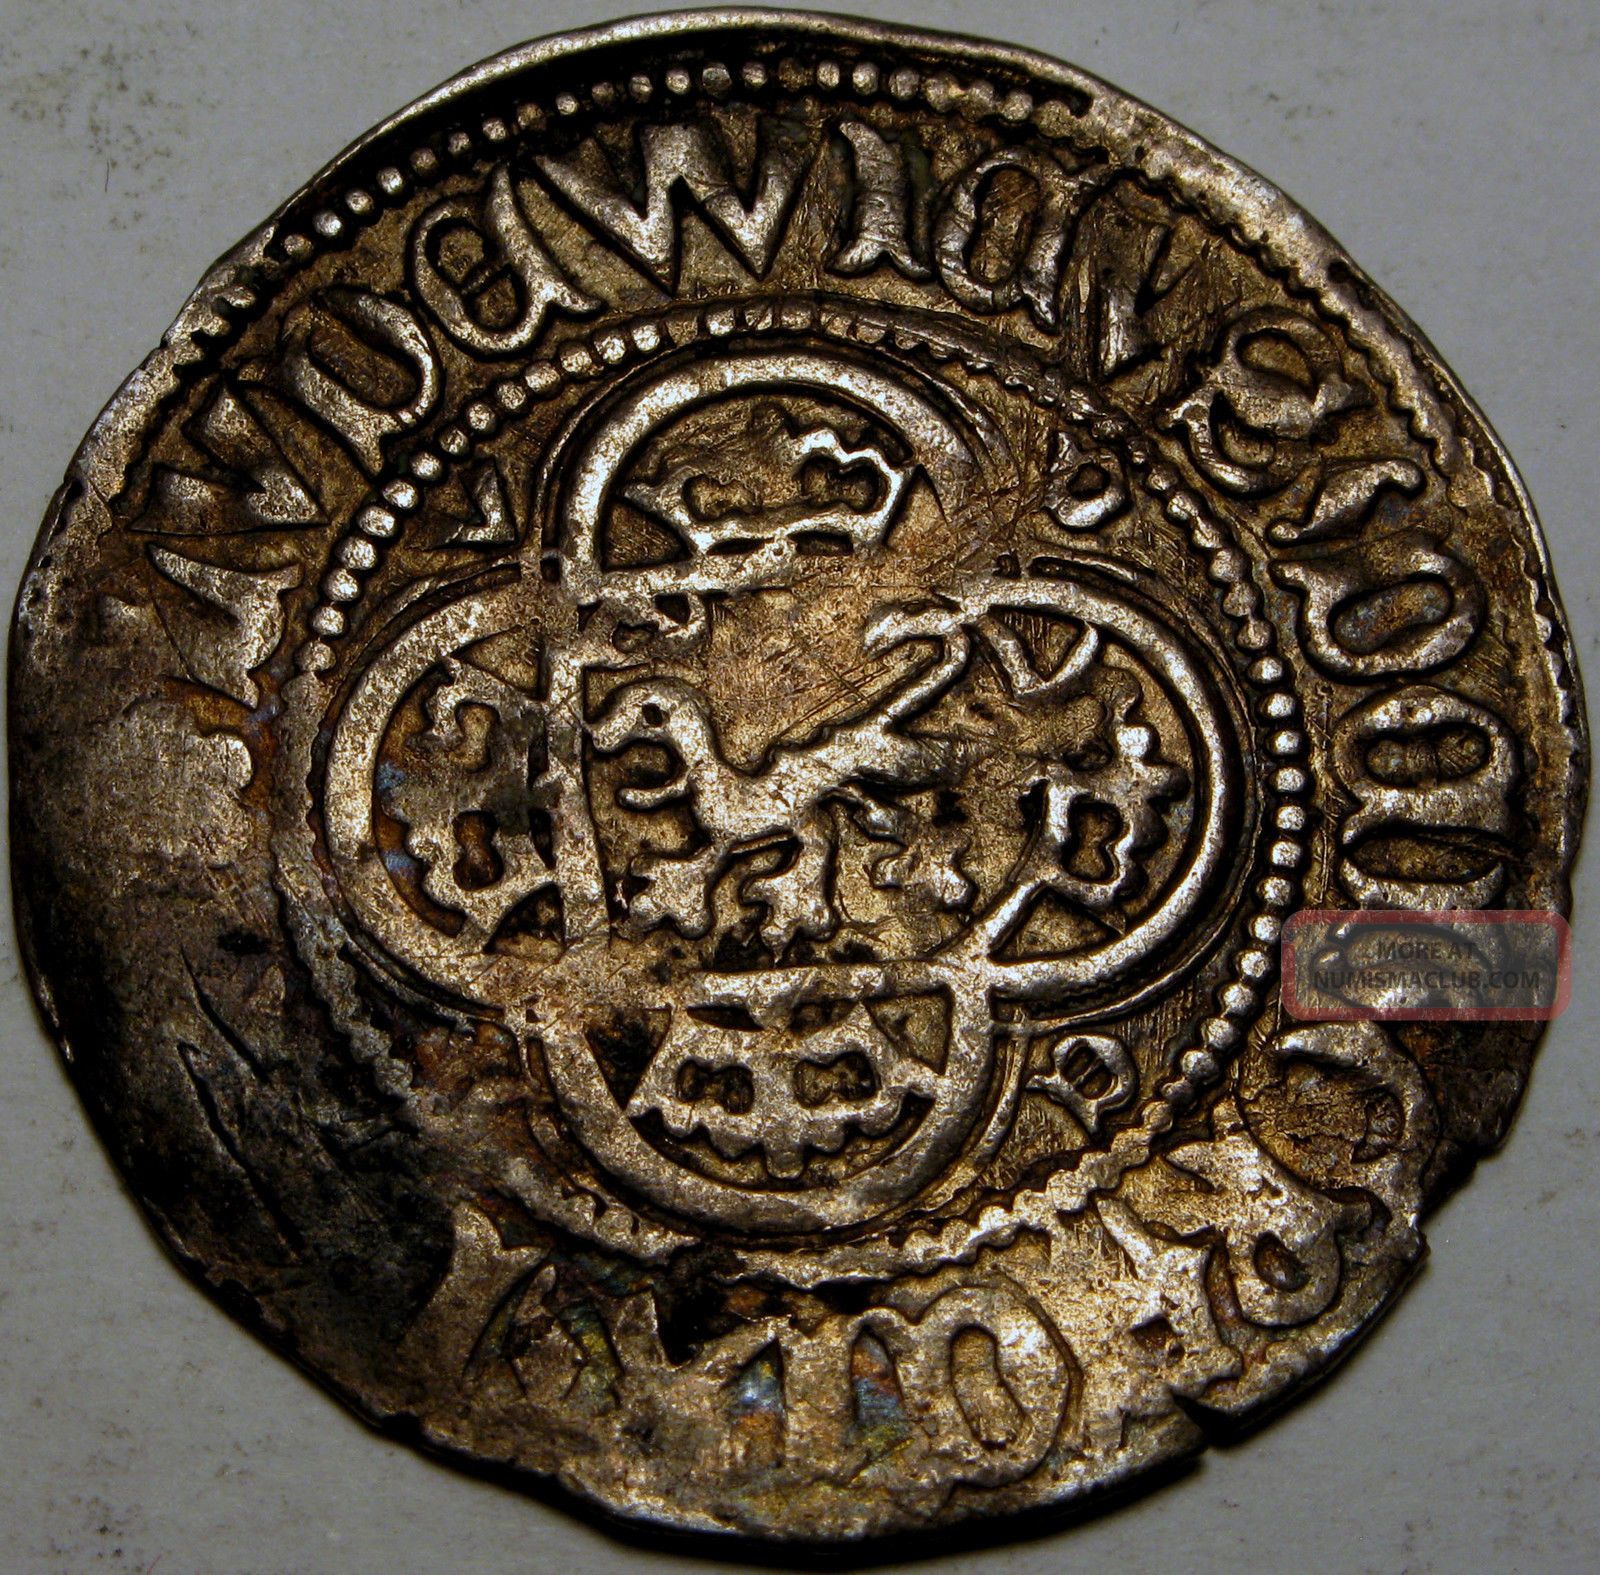 Hesse - Cassel (germany) Grossus - Silver - Ludwig Ii. (1413 - 1458) - 668